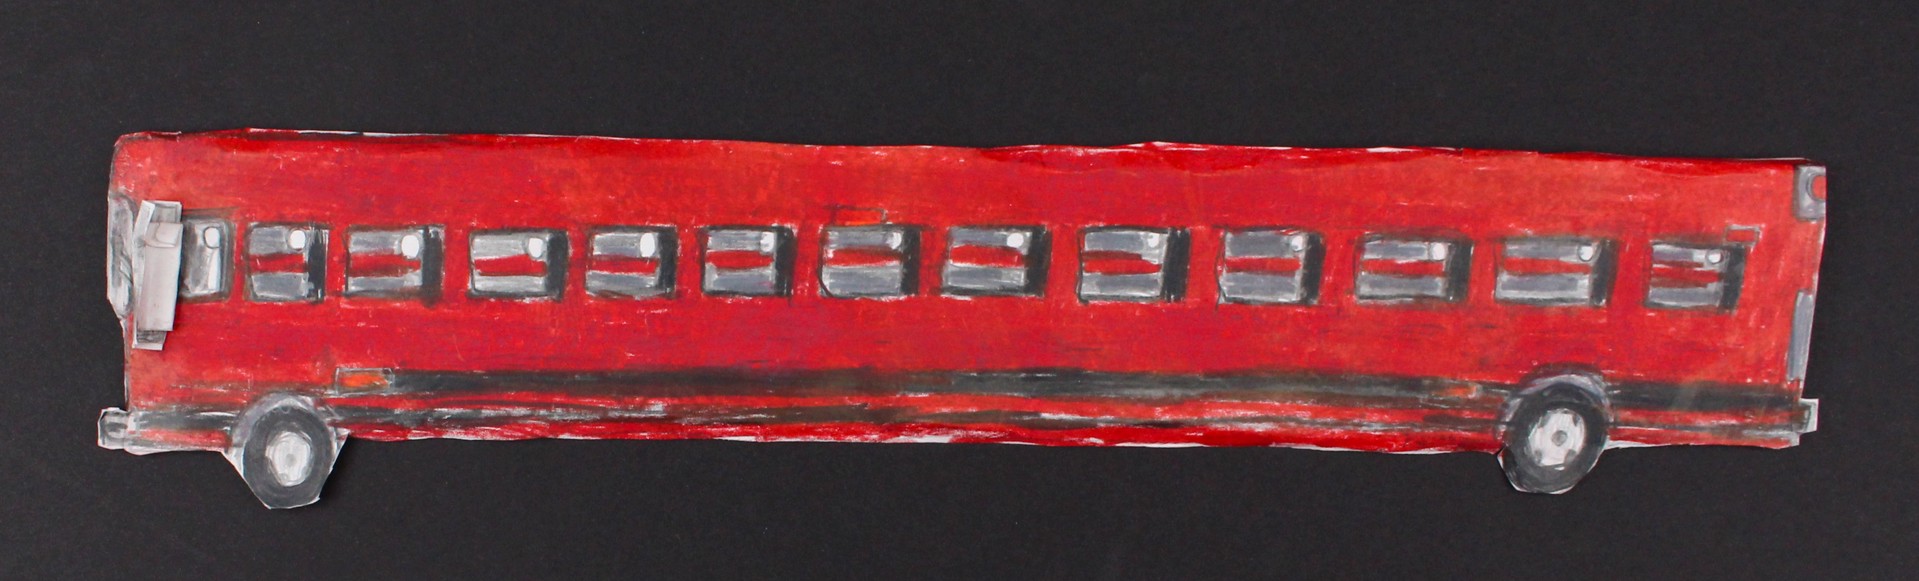 Red Bus by Michael Haynes